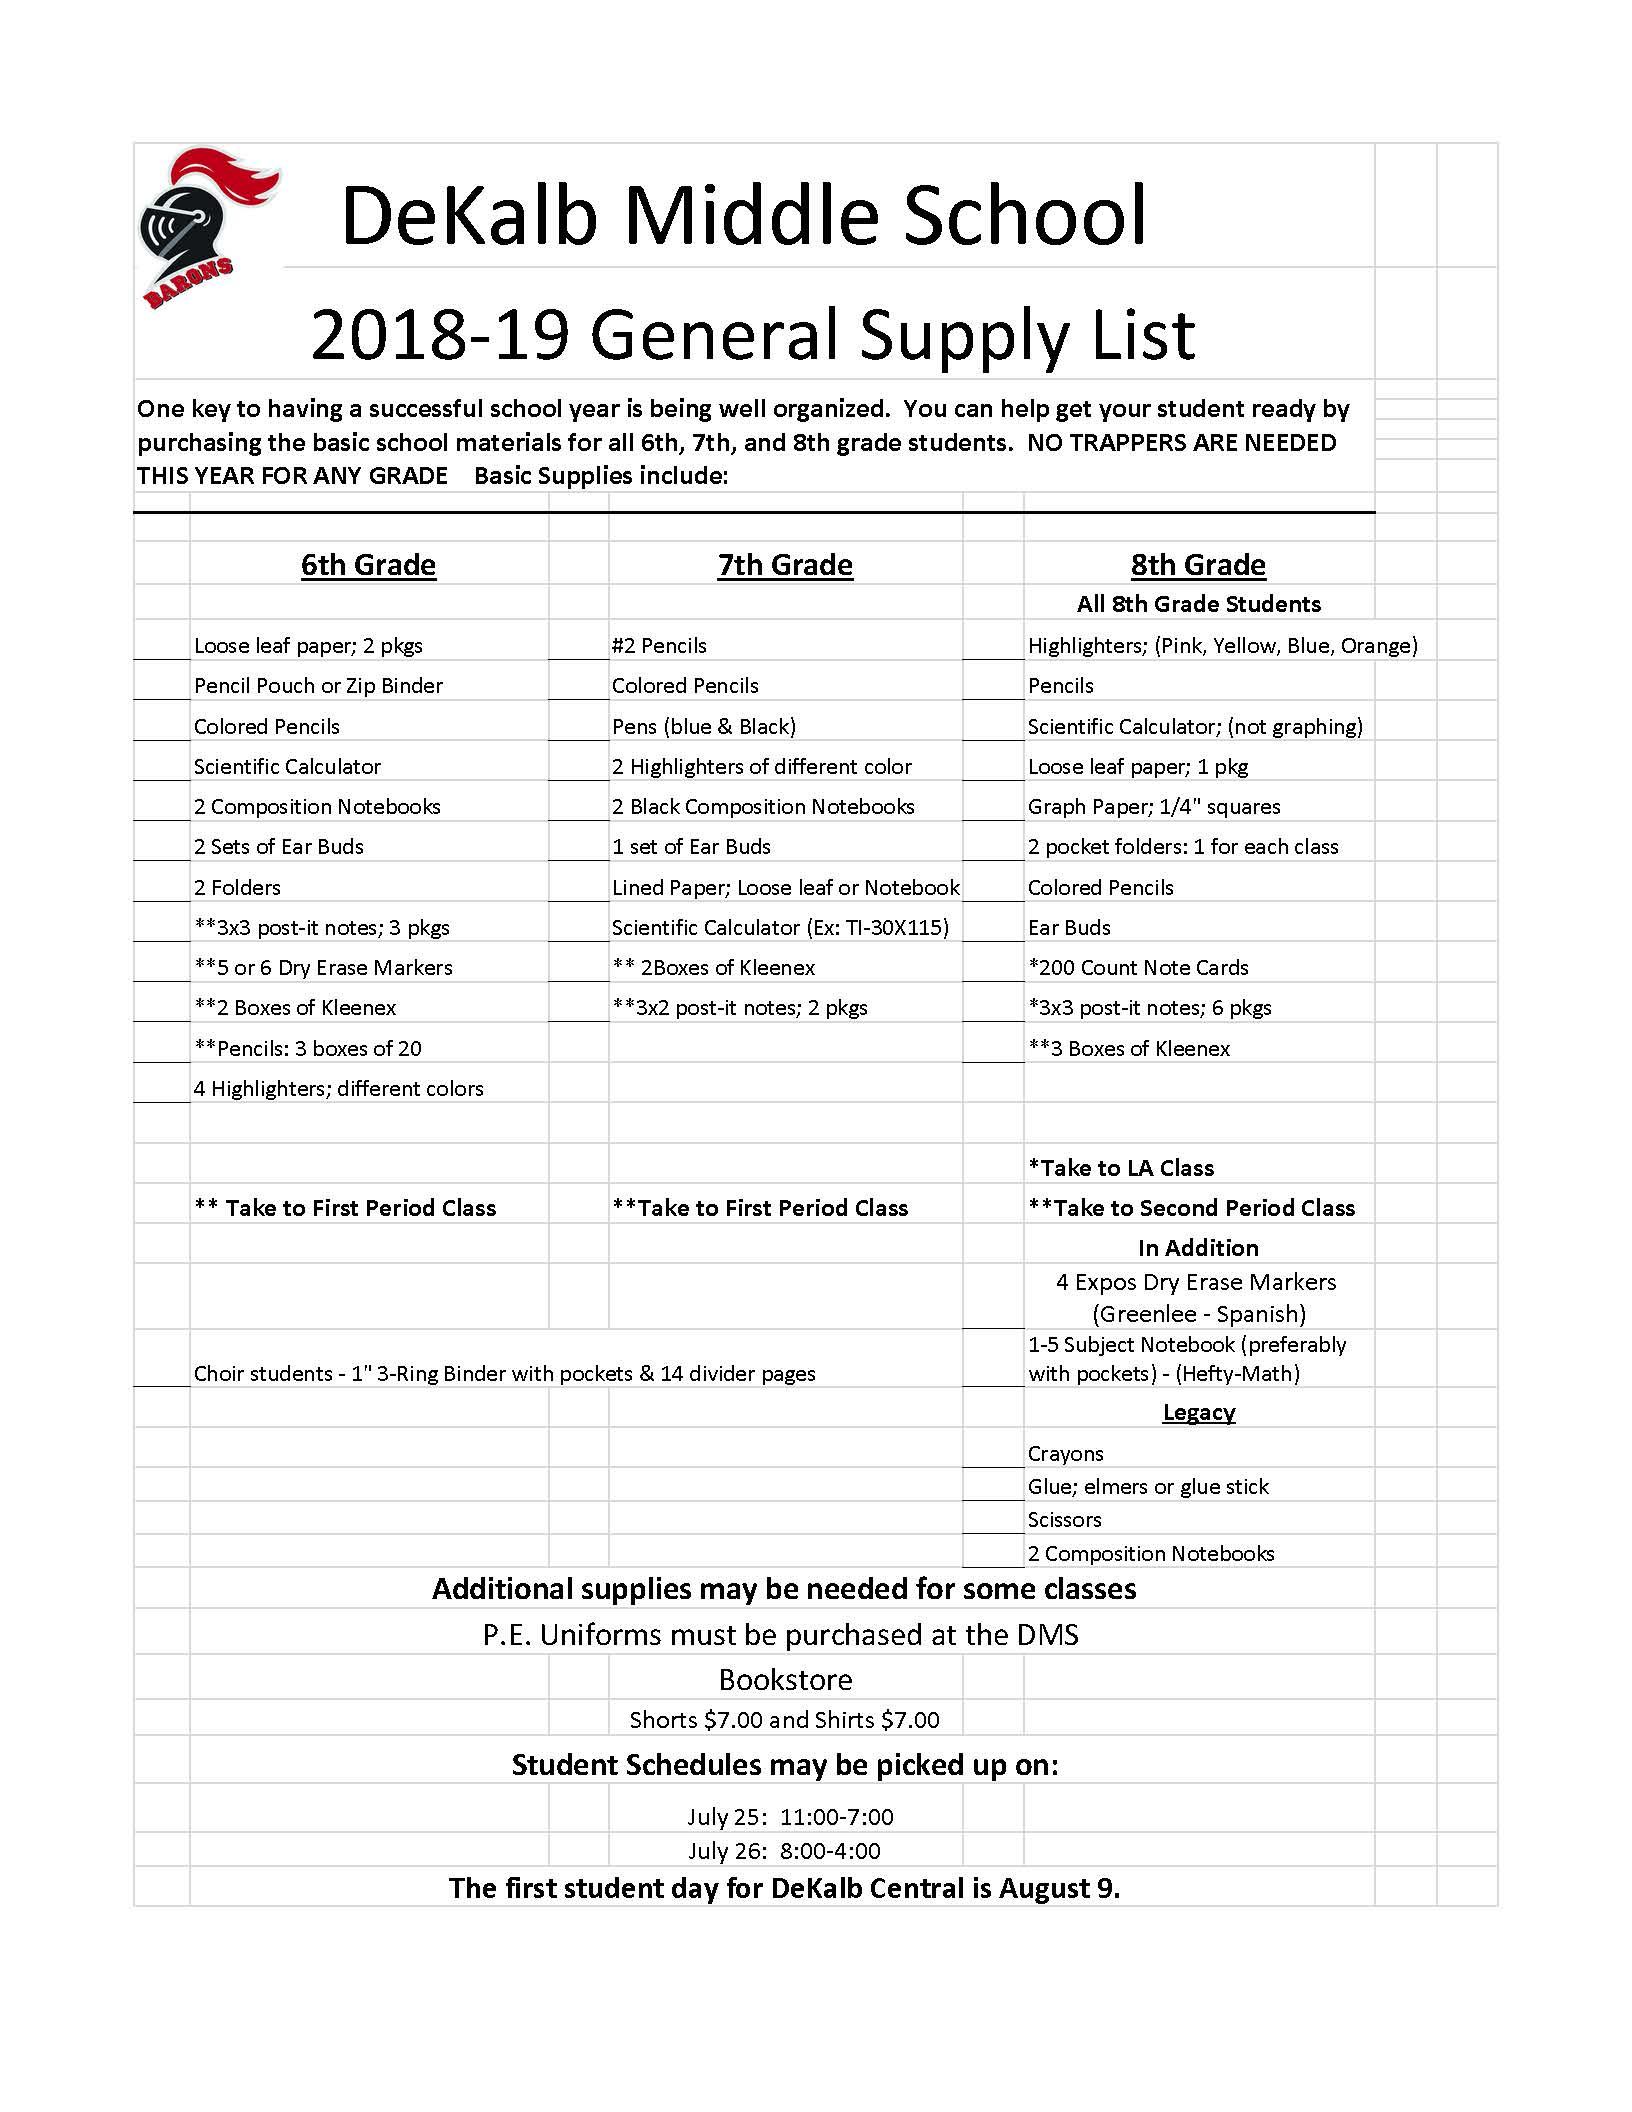 DMS Supplies Lists